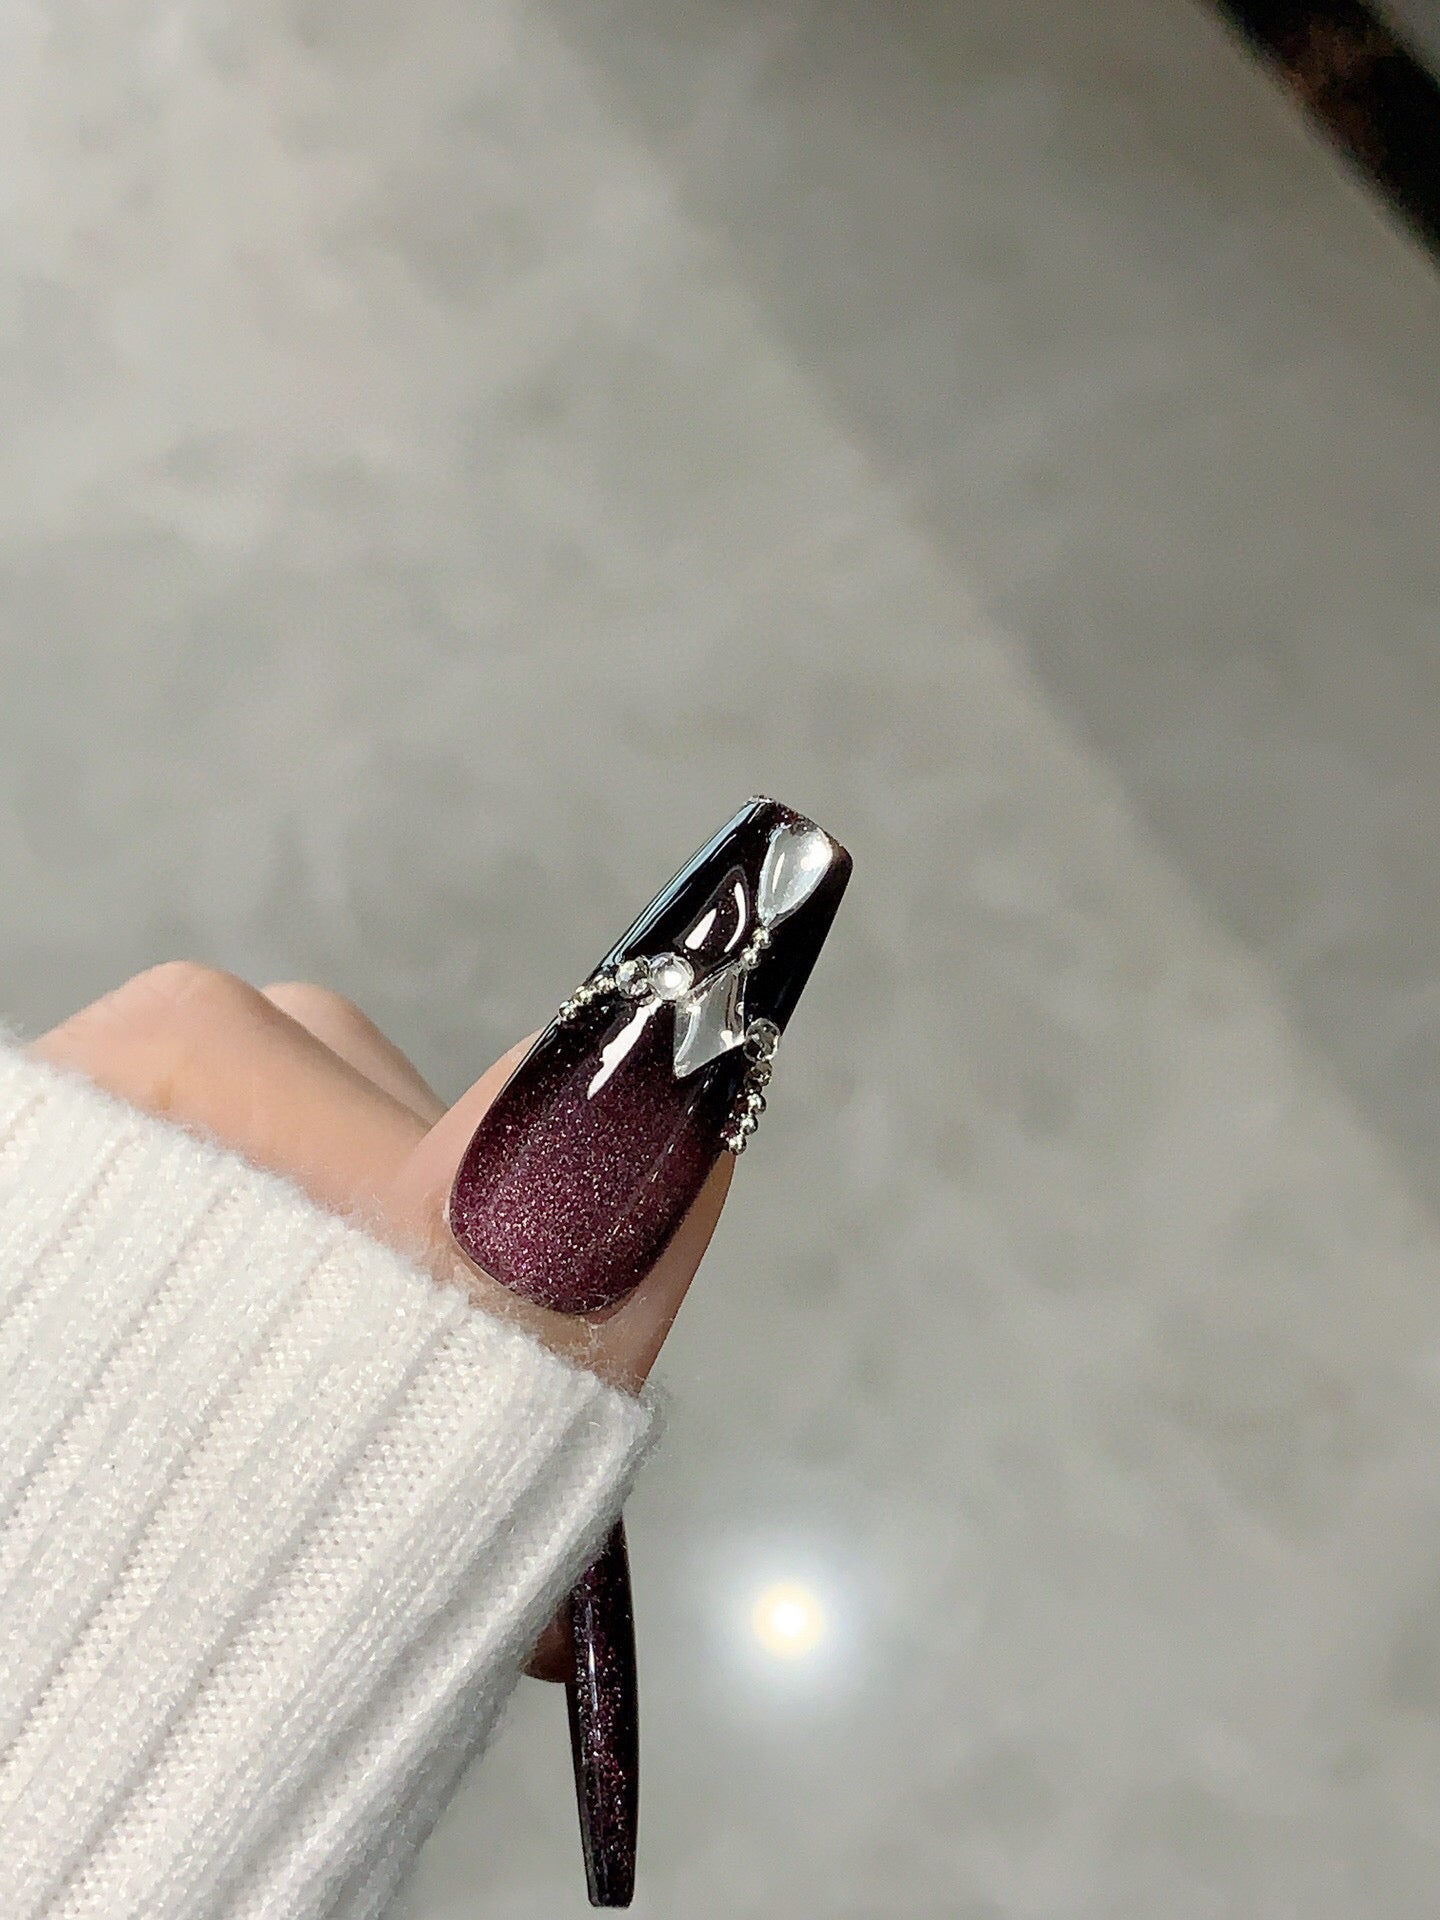 Luxury handmade nails | purple and black shining | press-on fake nails | reusable long nails